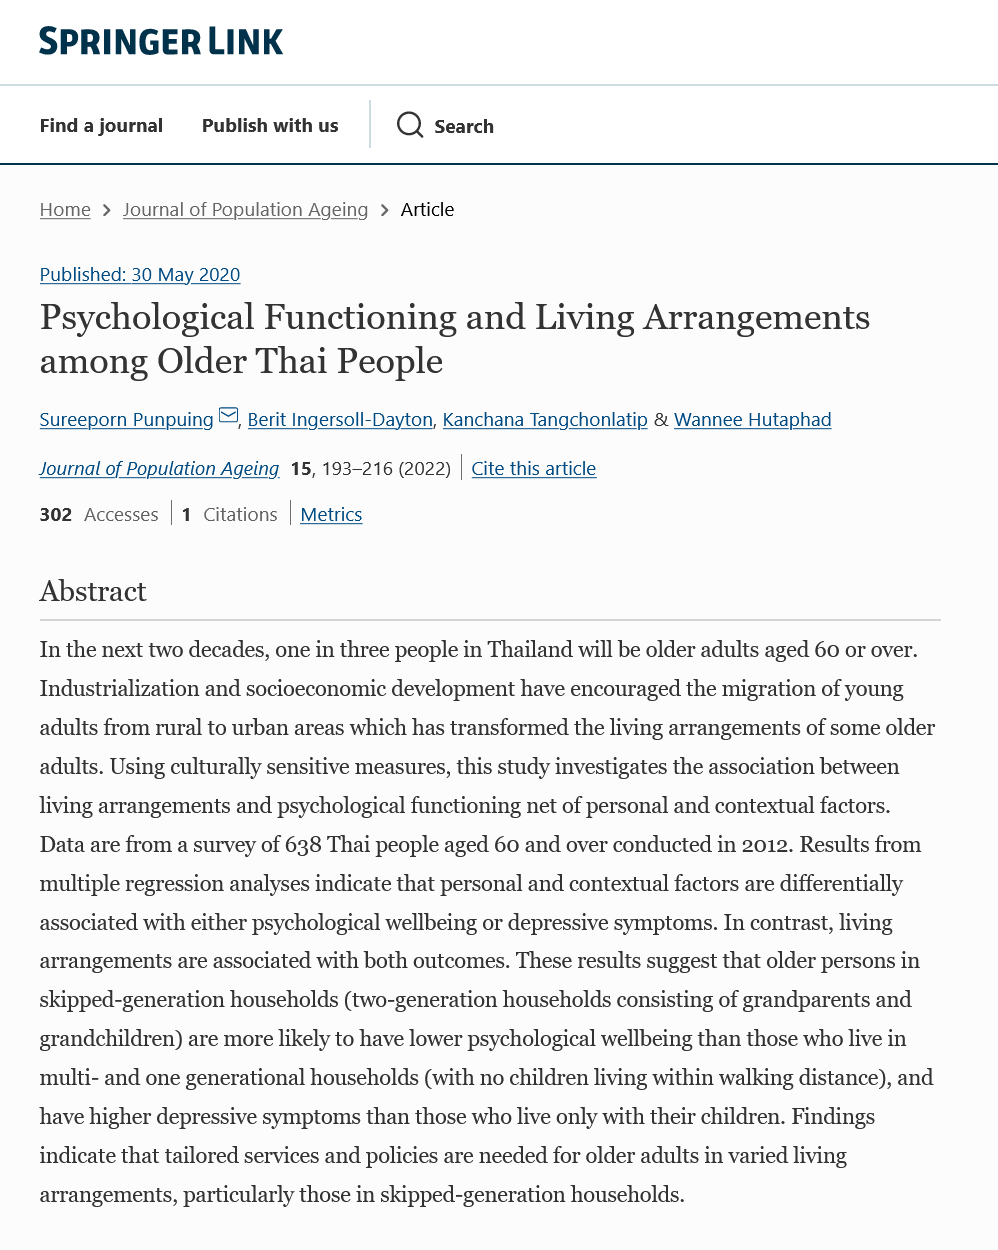 Psychological Functioning and Living Arrangements among Older Thai People